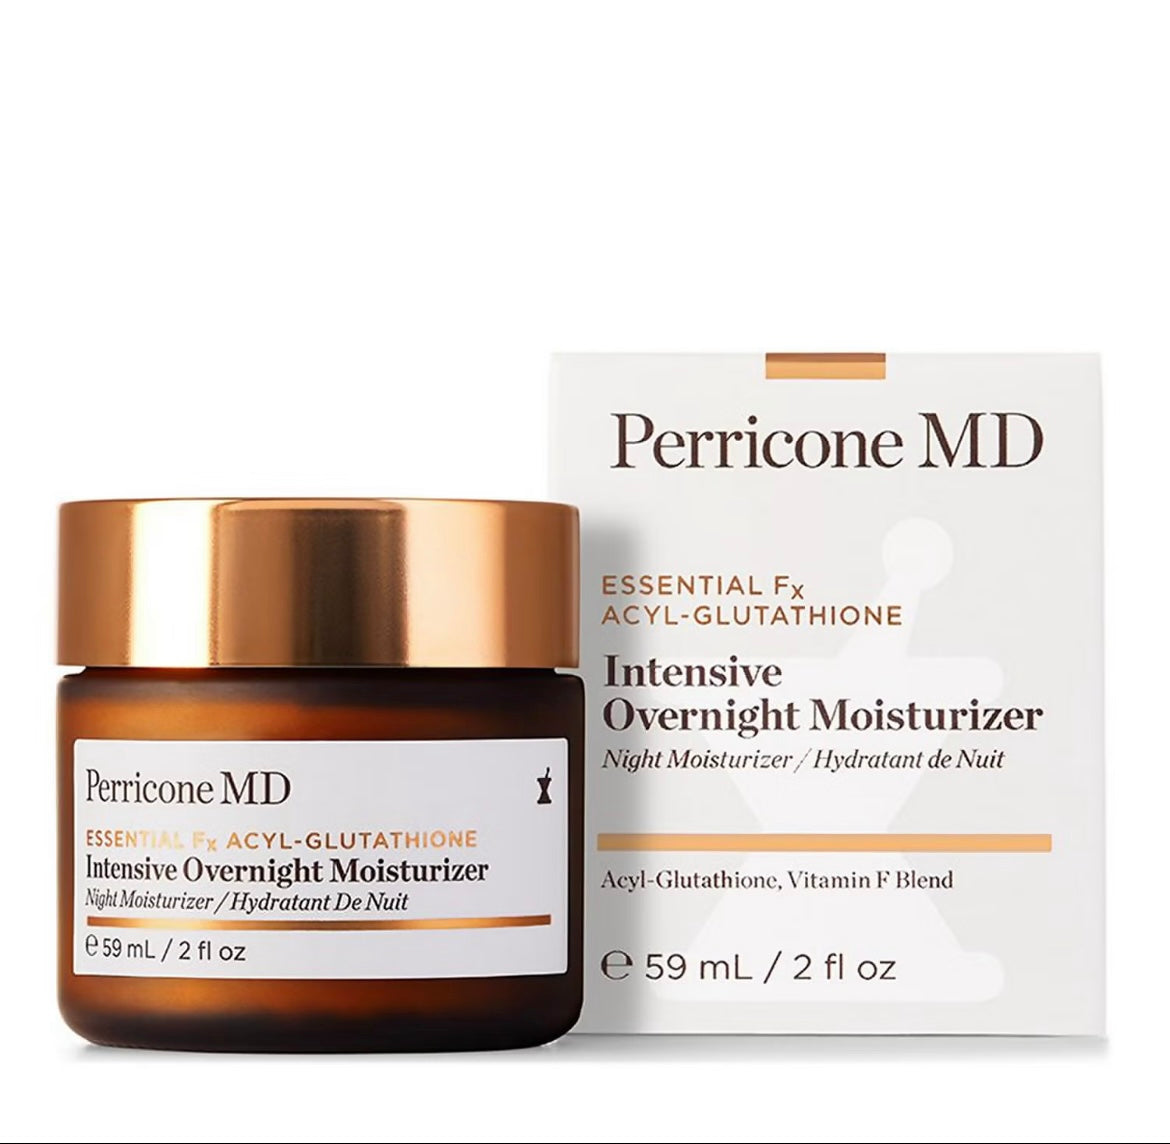 Perricone MD Essential fx Acyl-Glutithione Intensive Overnight Moisturizer